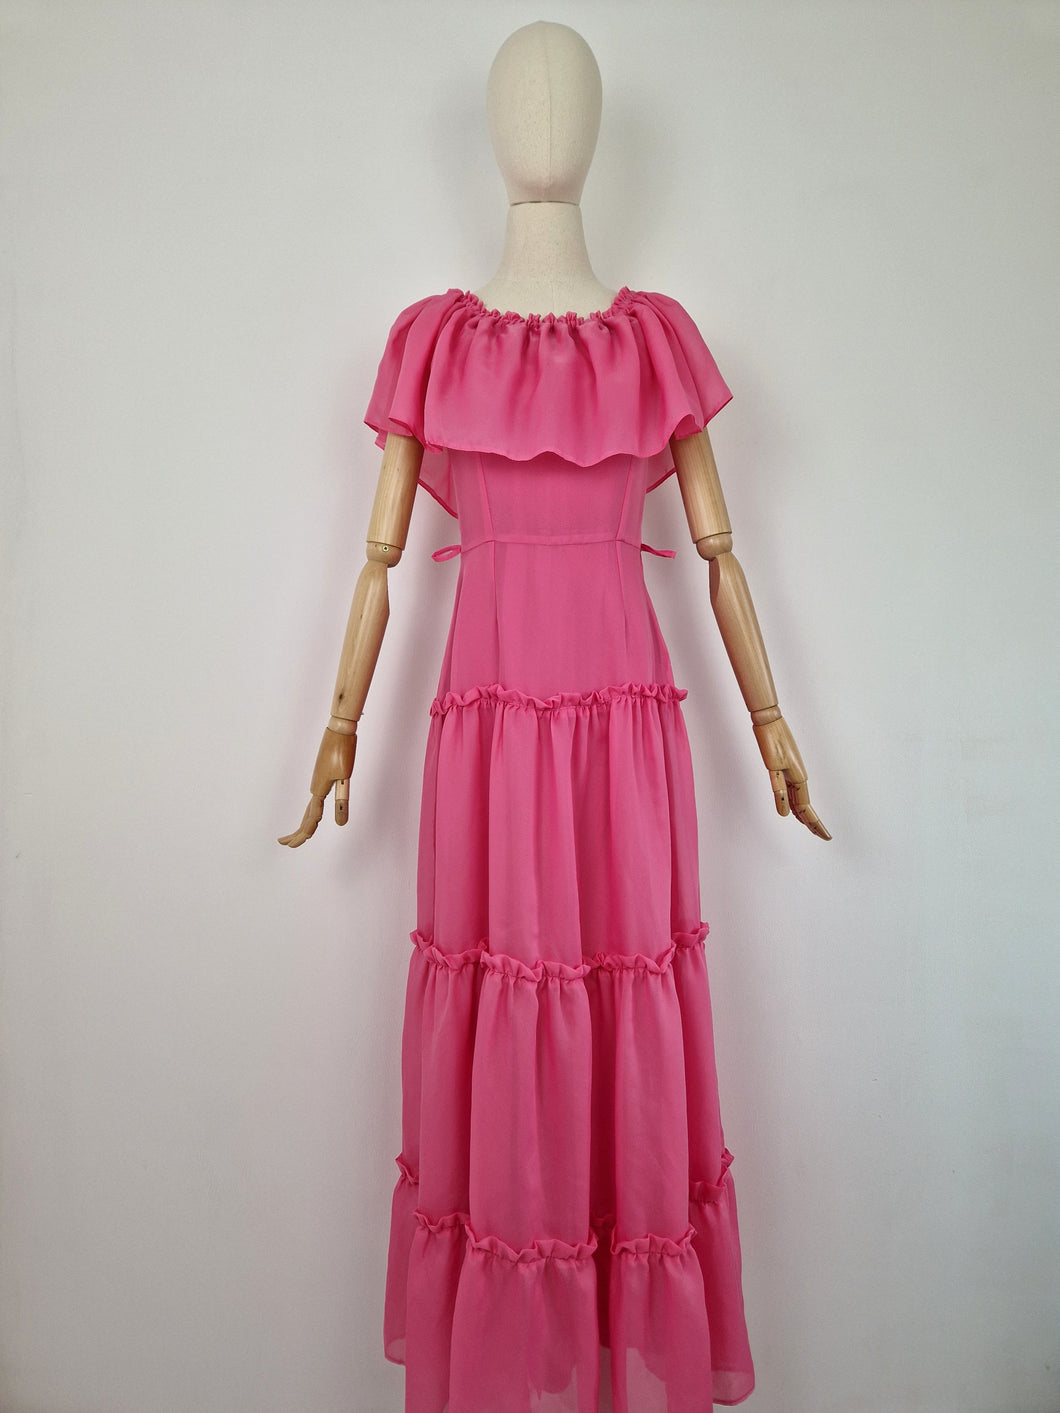 Vintage 70s pink maxi dress